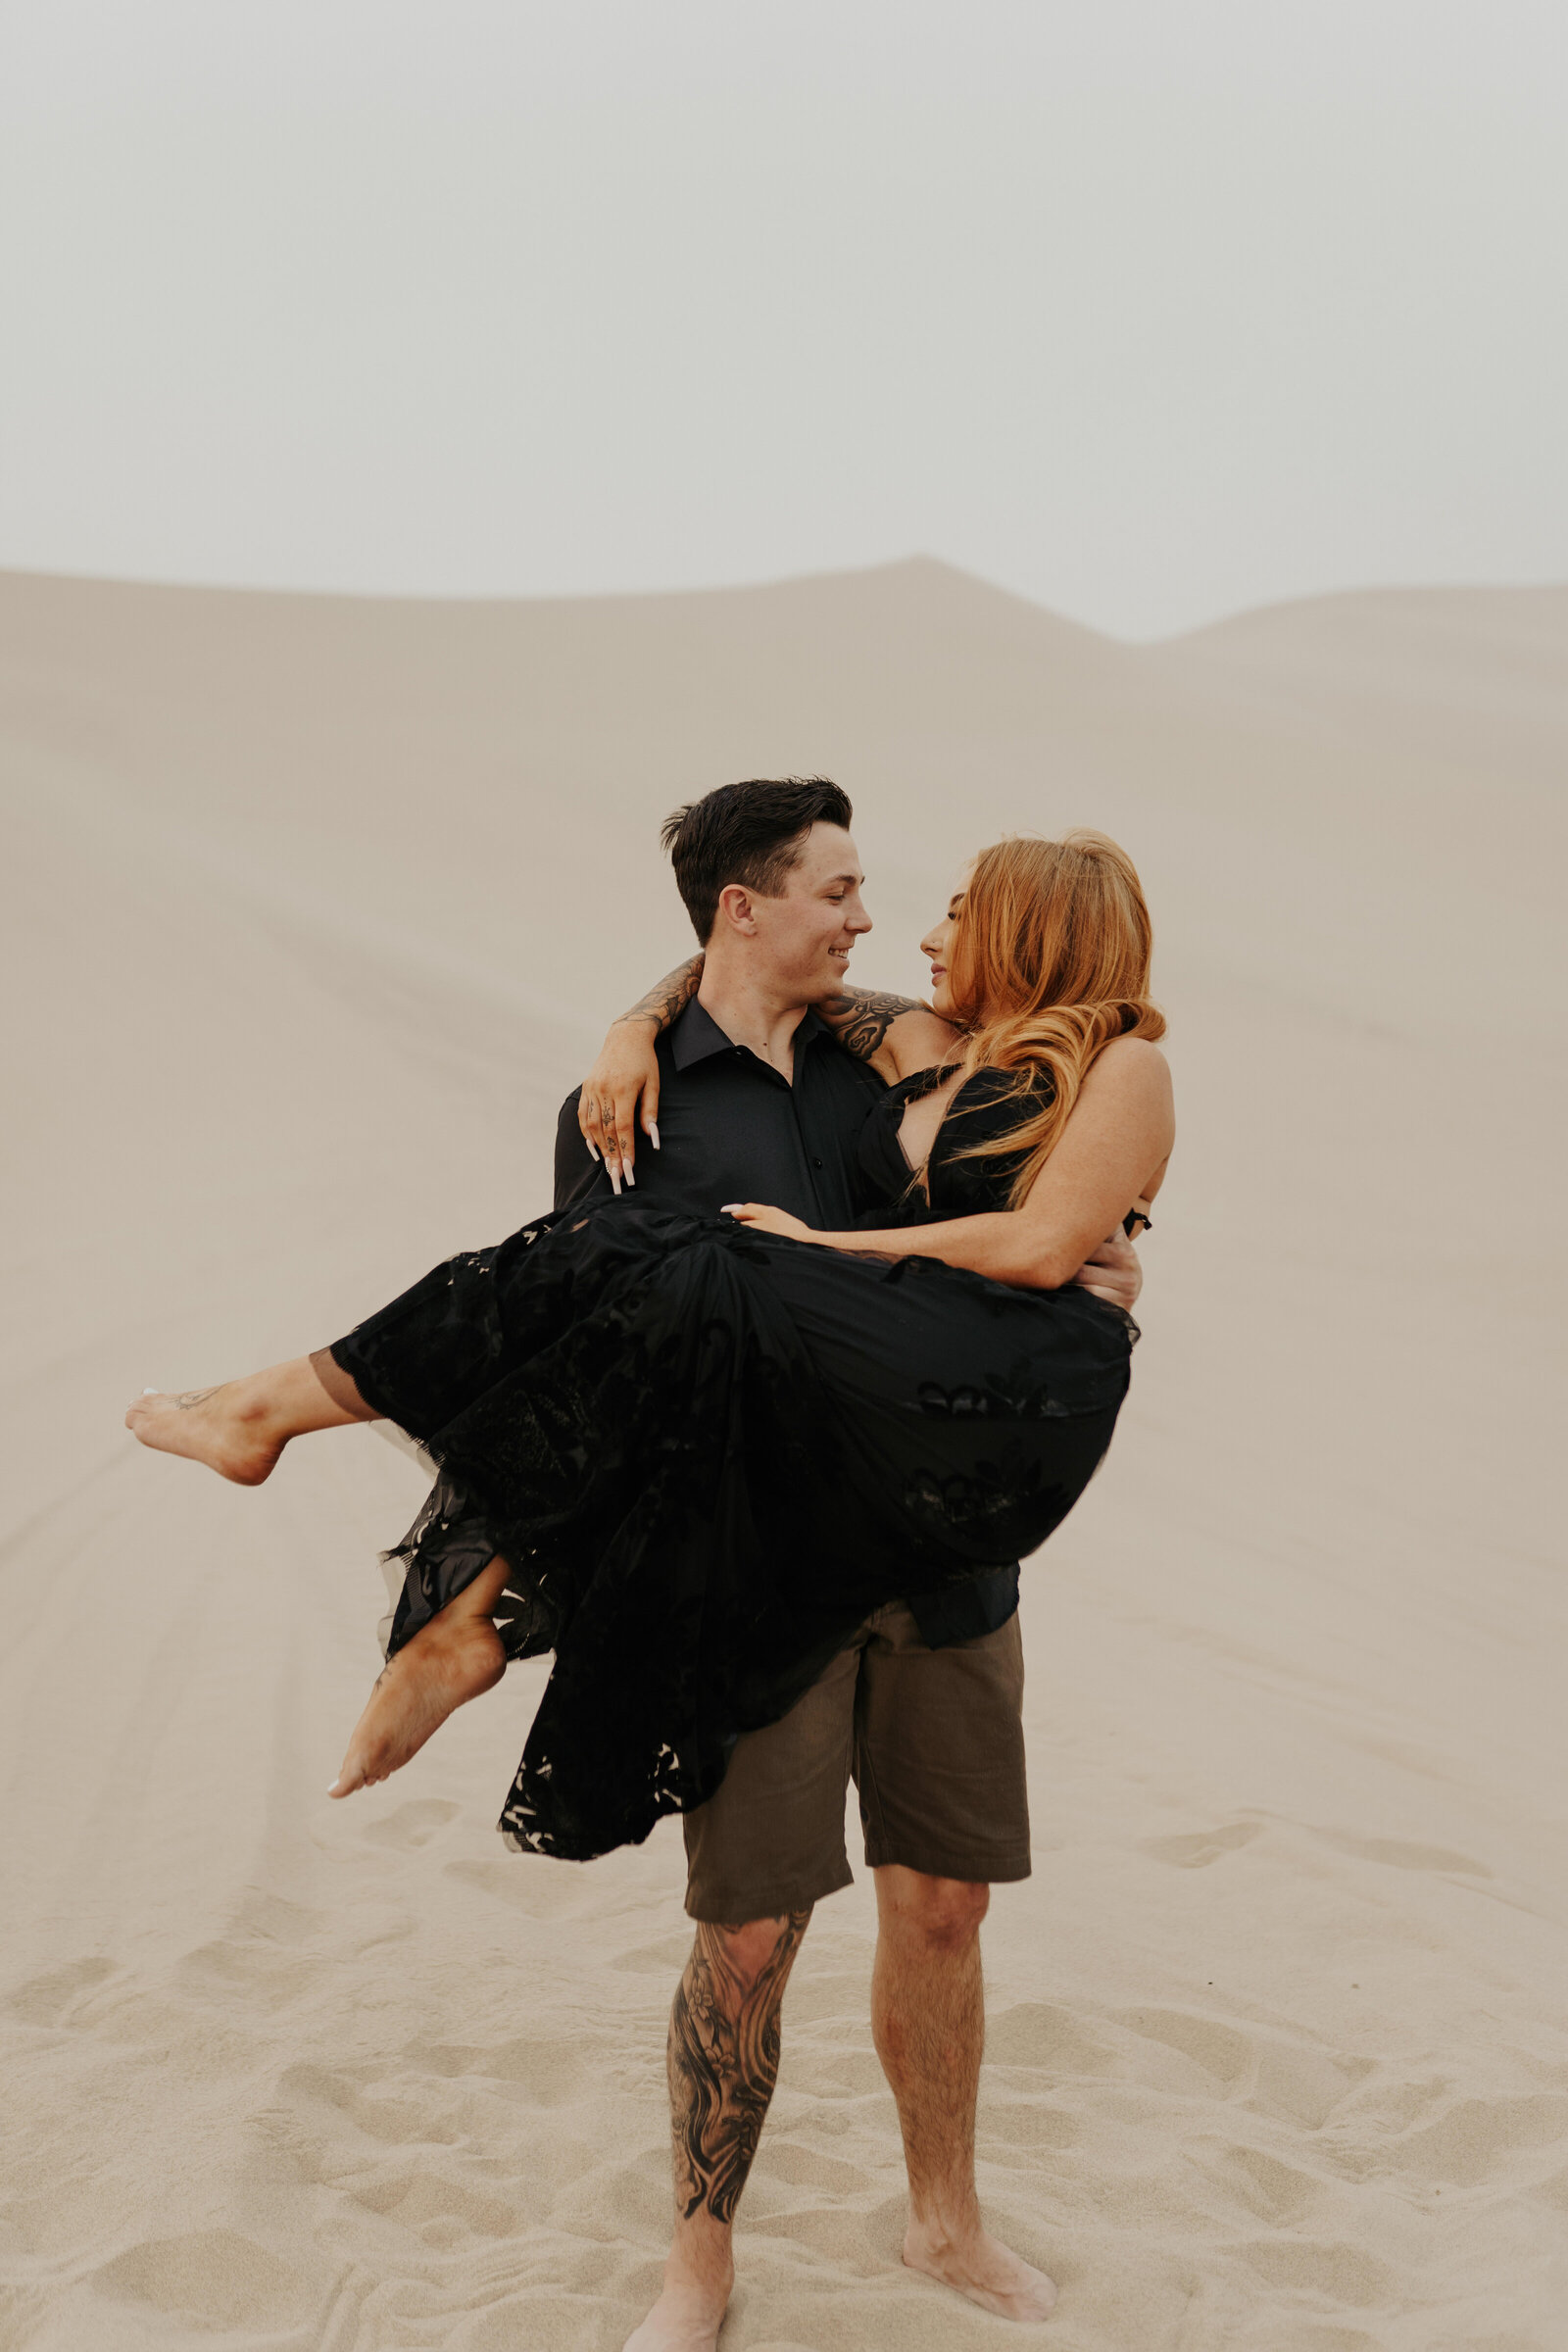 Sand Dunes Couples Photos - Raquel King Photography41